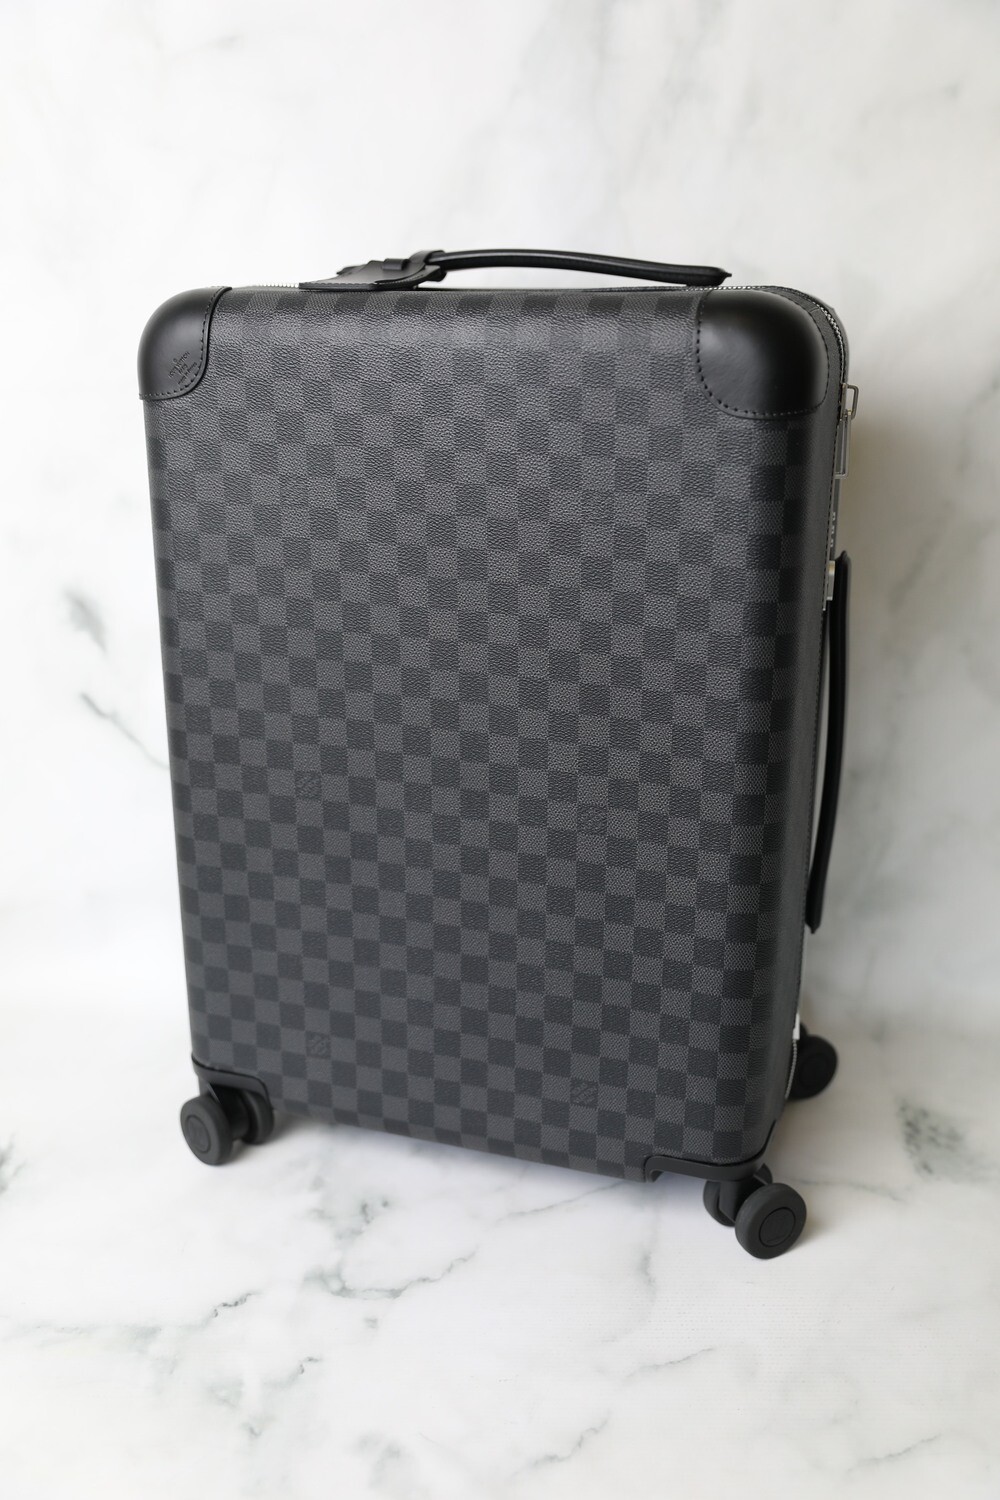 Louis Vuitton Horizon 55 Roller Carry-on Suitcase, Damier Graphite